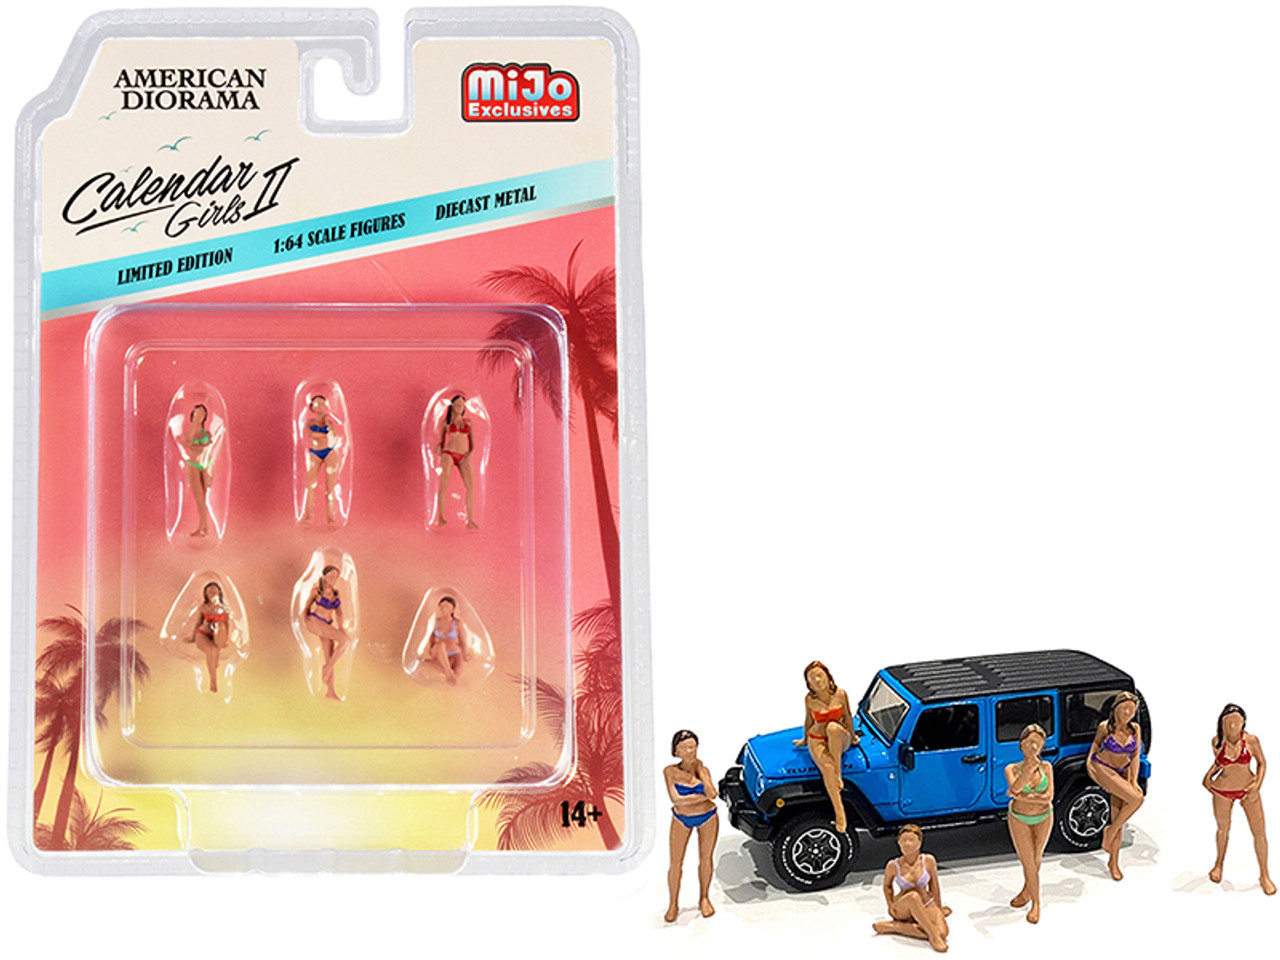 "Calendar Girls" 6 piece Diecast Figurine Set Release 2 for 1/64 Scale Models by American Diorama